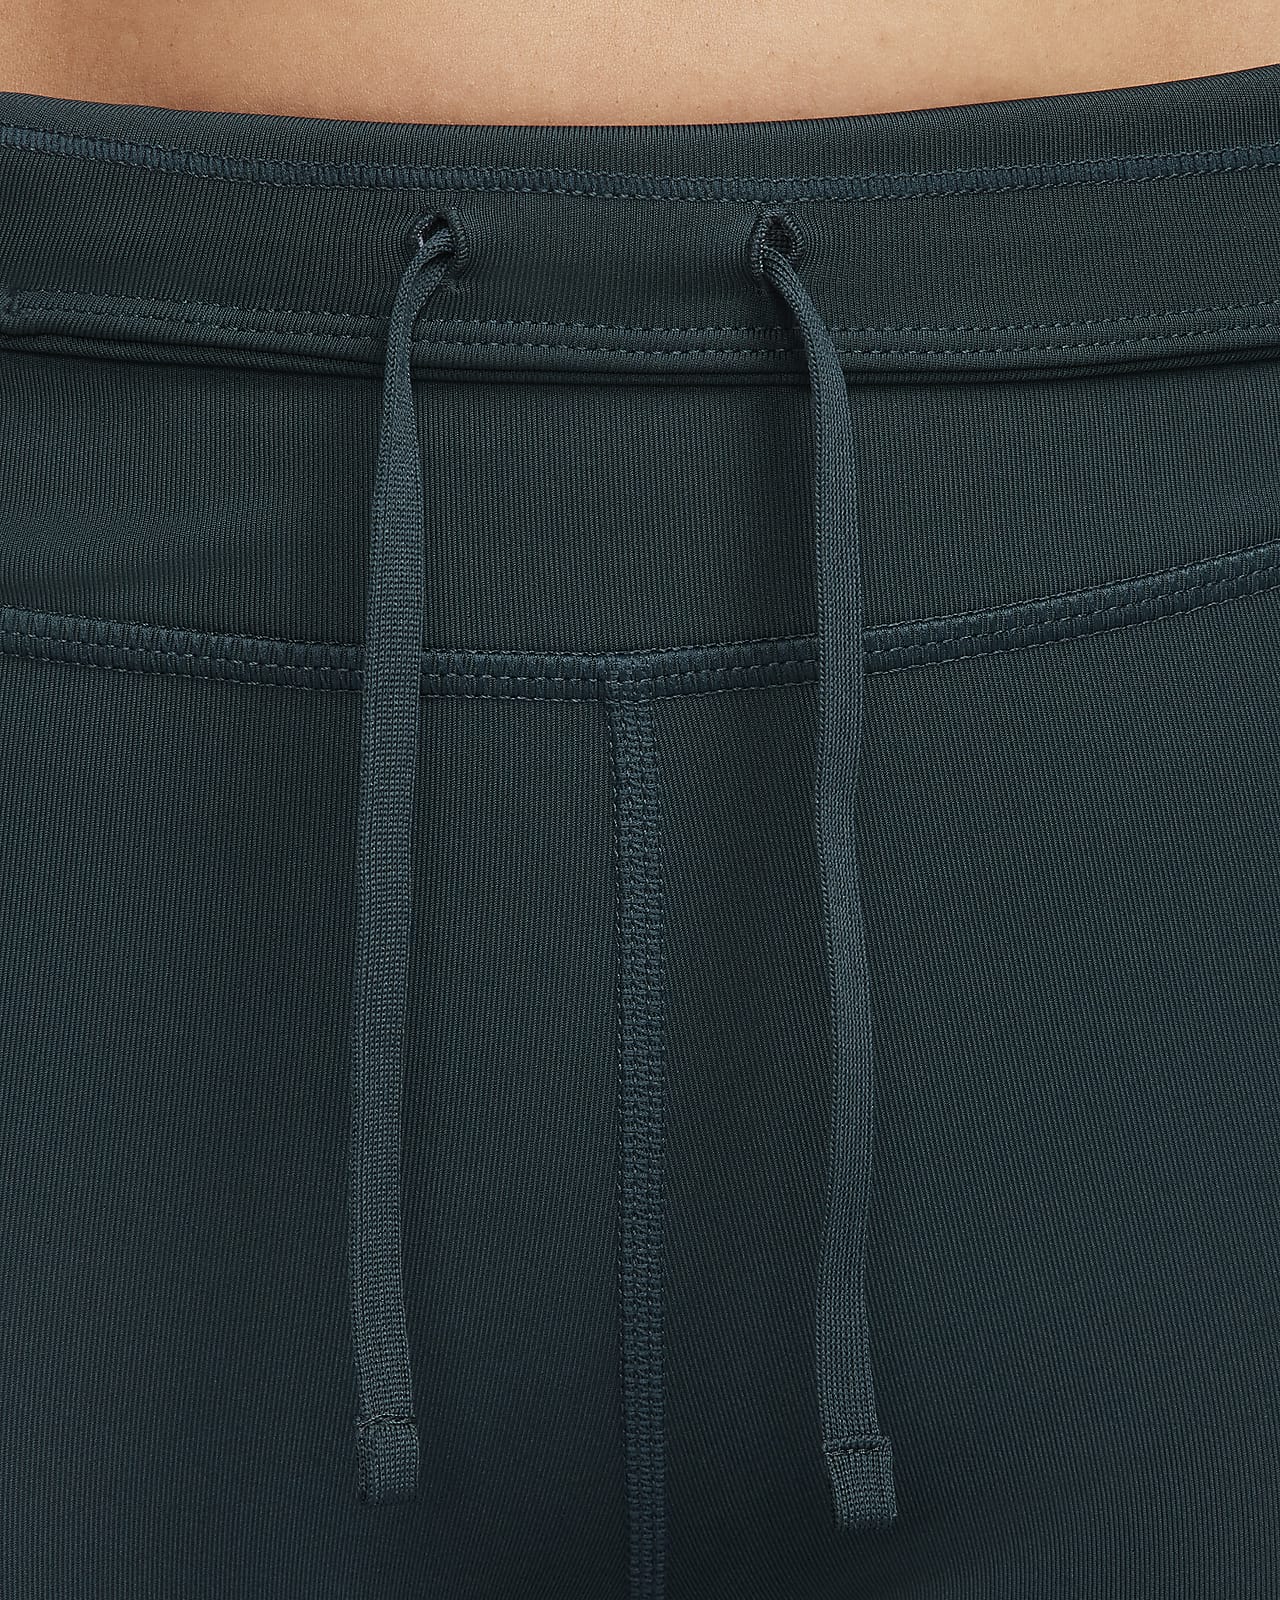 Nike pro women's mid-rise 7/8 printed leggings, pants